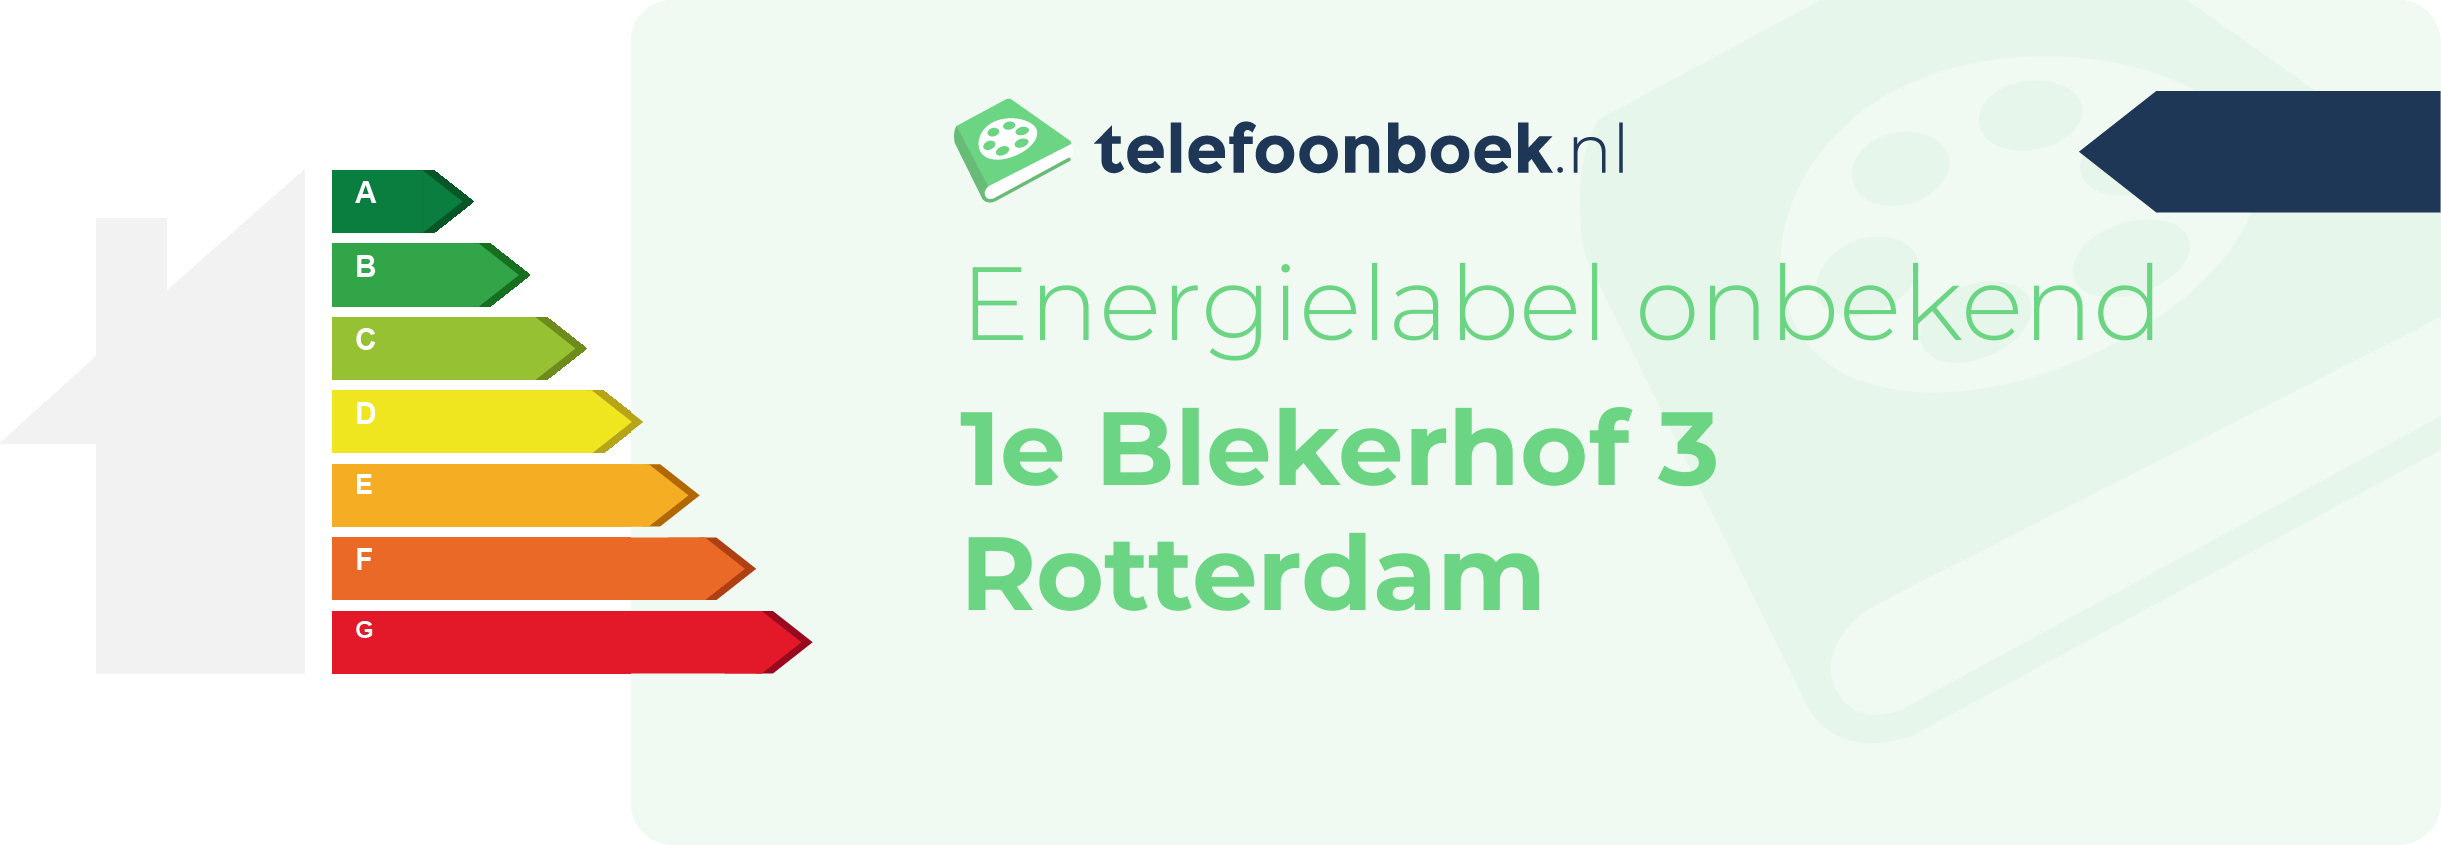 Energielabel 1e Blekerhof 3 Rotterdam